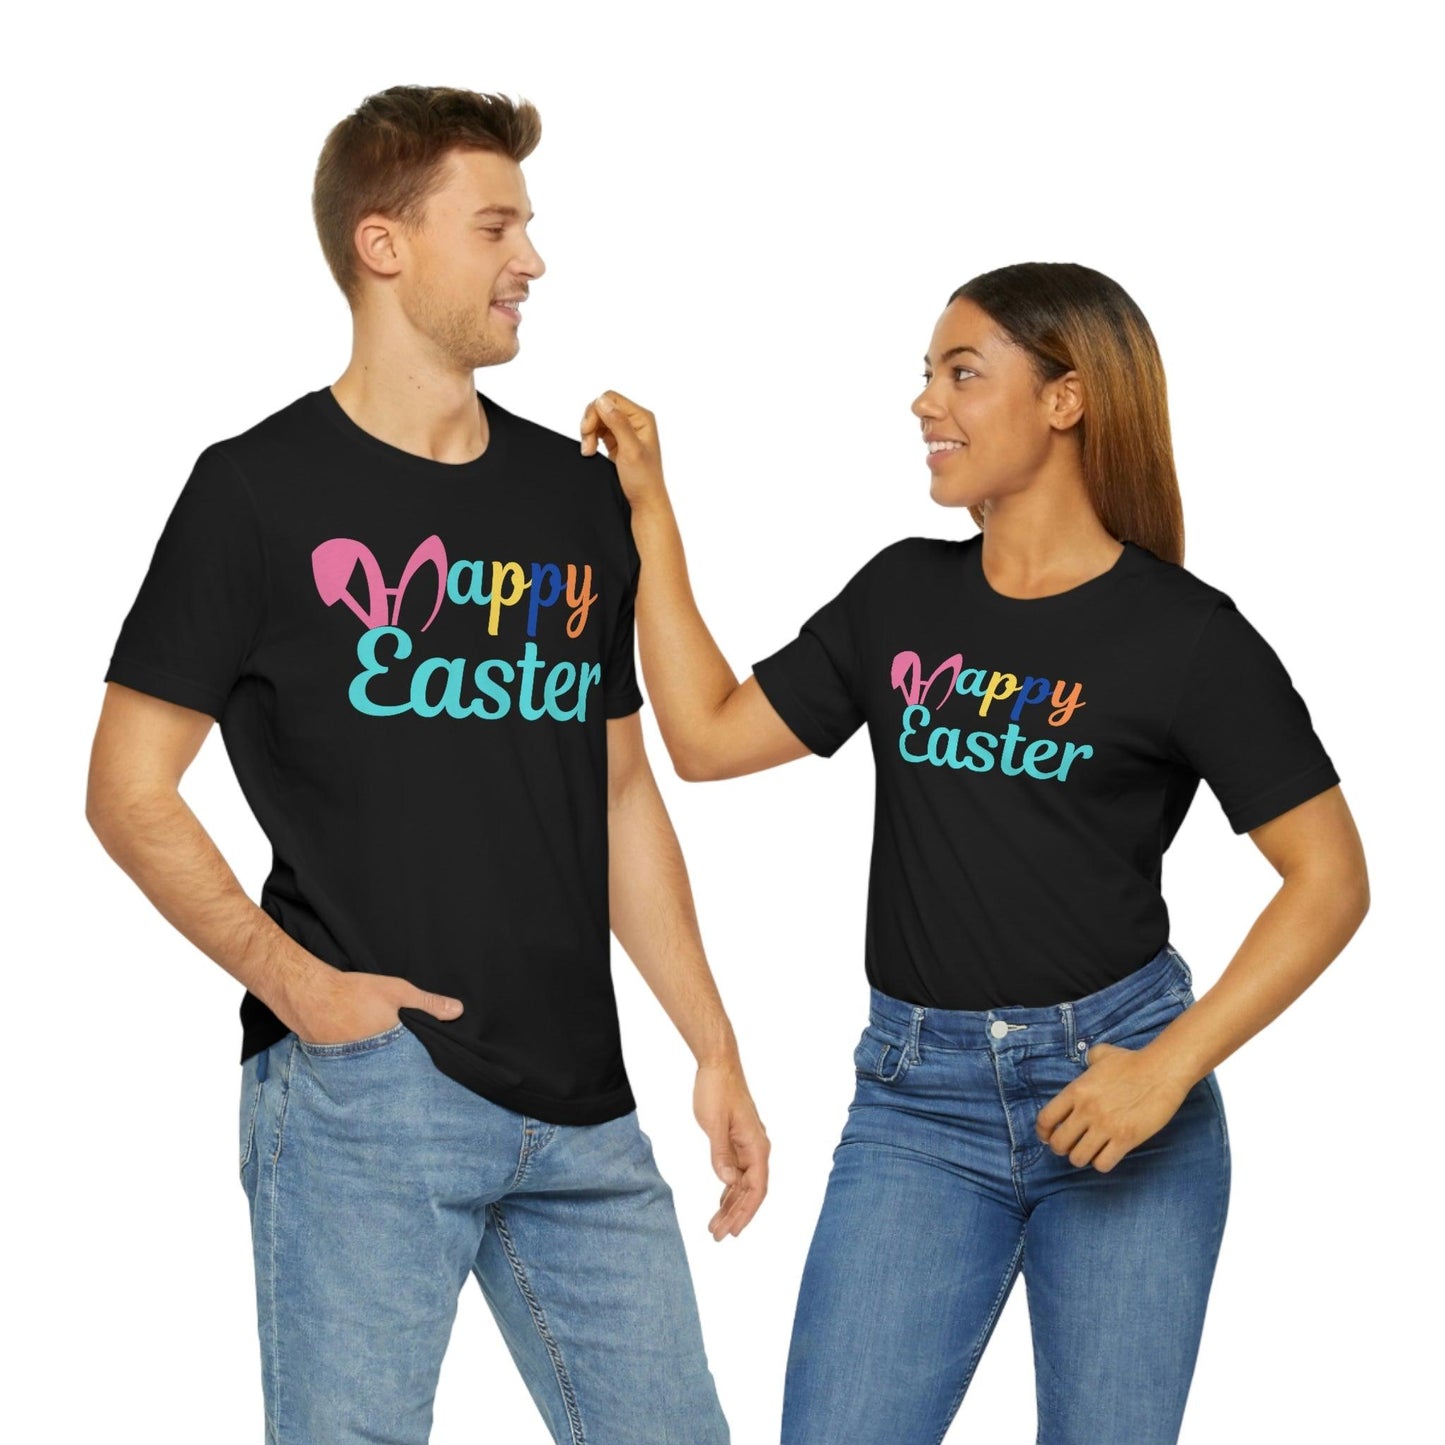 Happy Easter Bunny shirt Easter Gift women Easter Shirt Men Easter shirt - Easter Day Shirt Easter Bunny Easter egg shirt